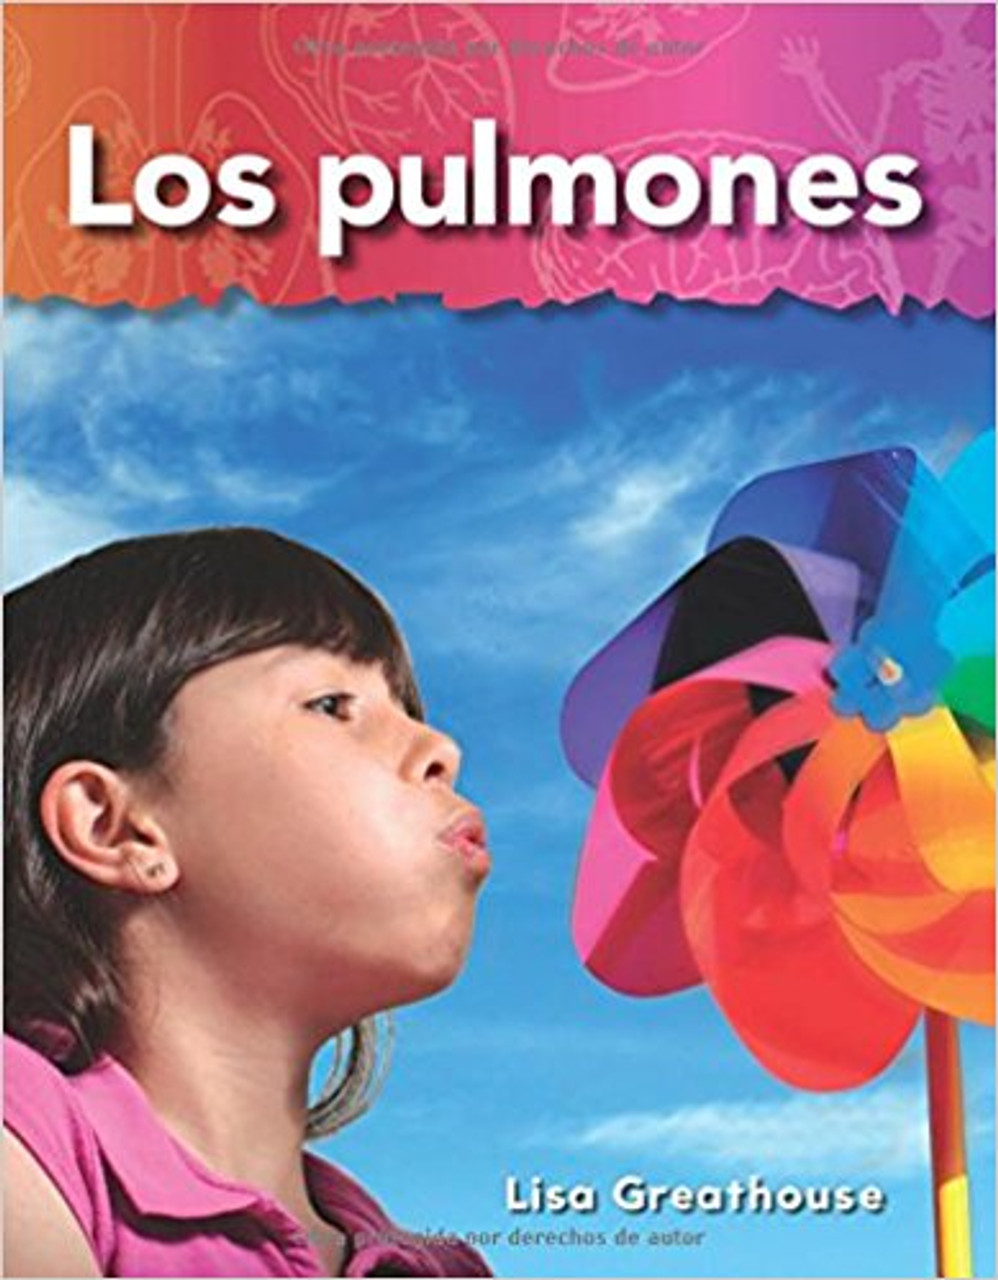 Los pulmones (Lungs) by Lisa Greathouse